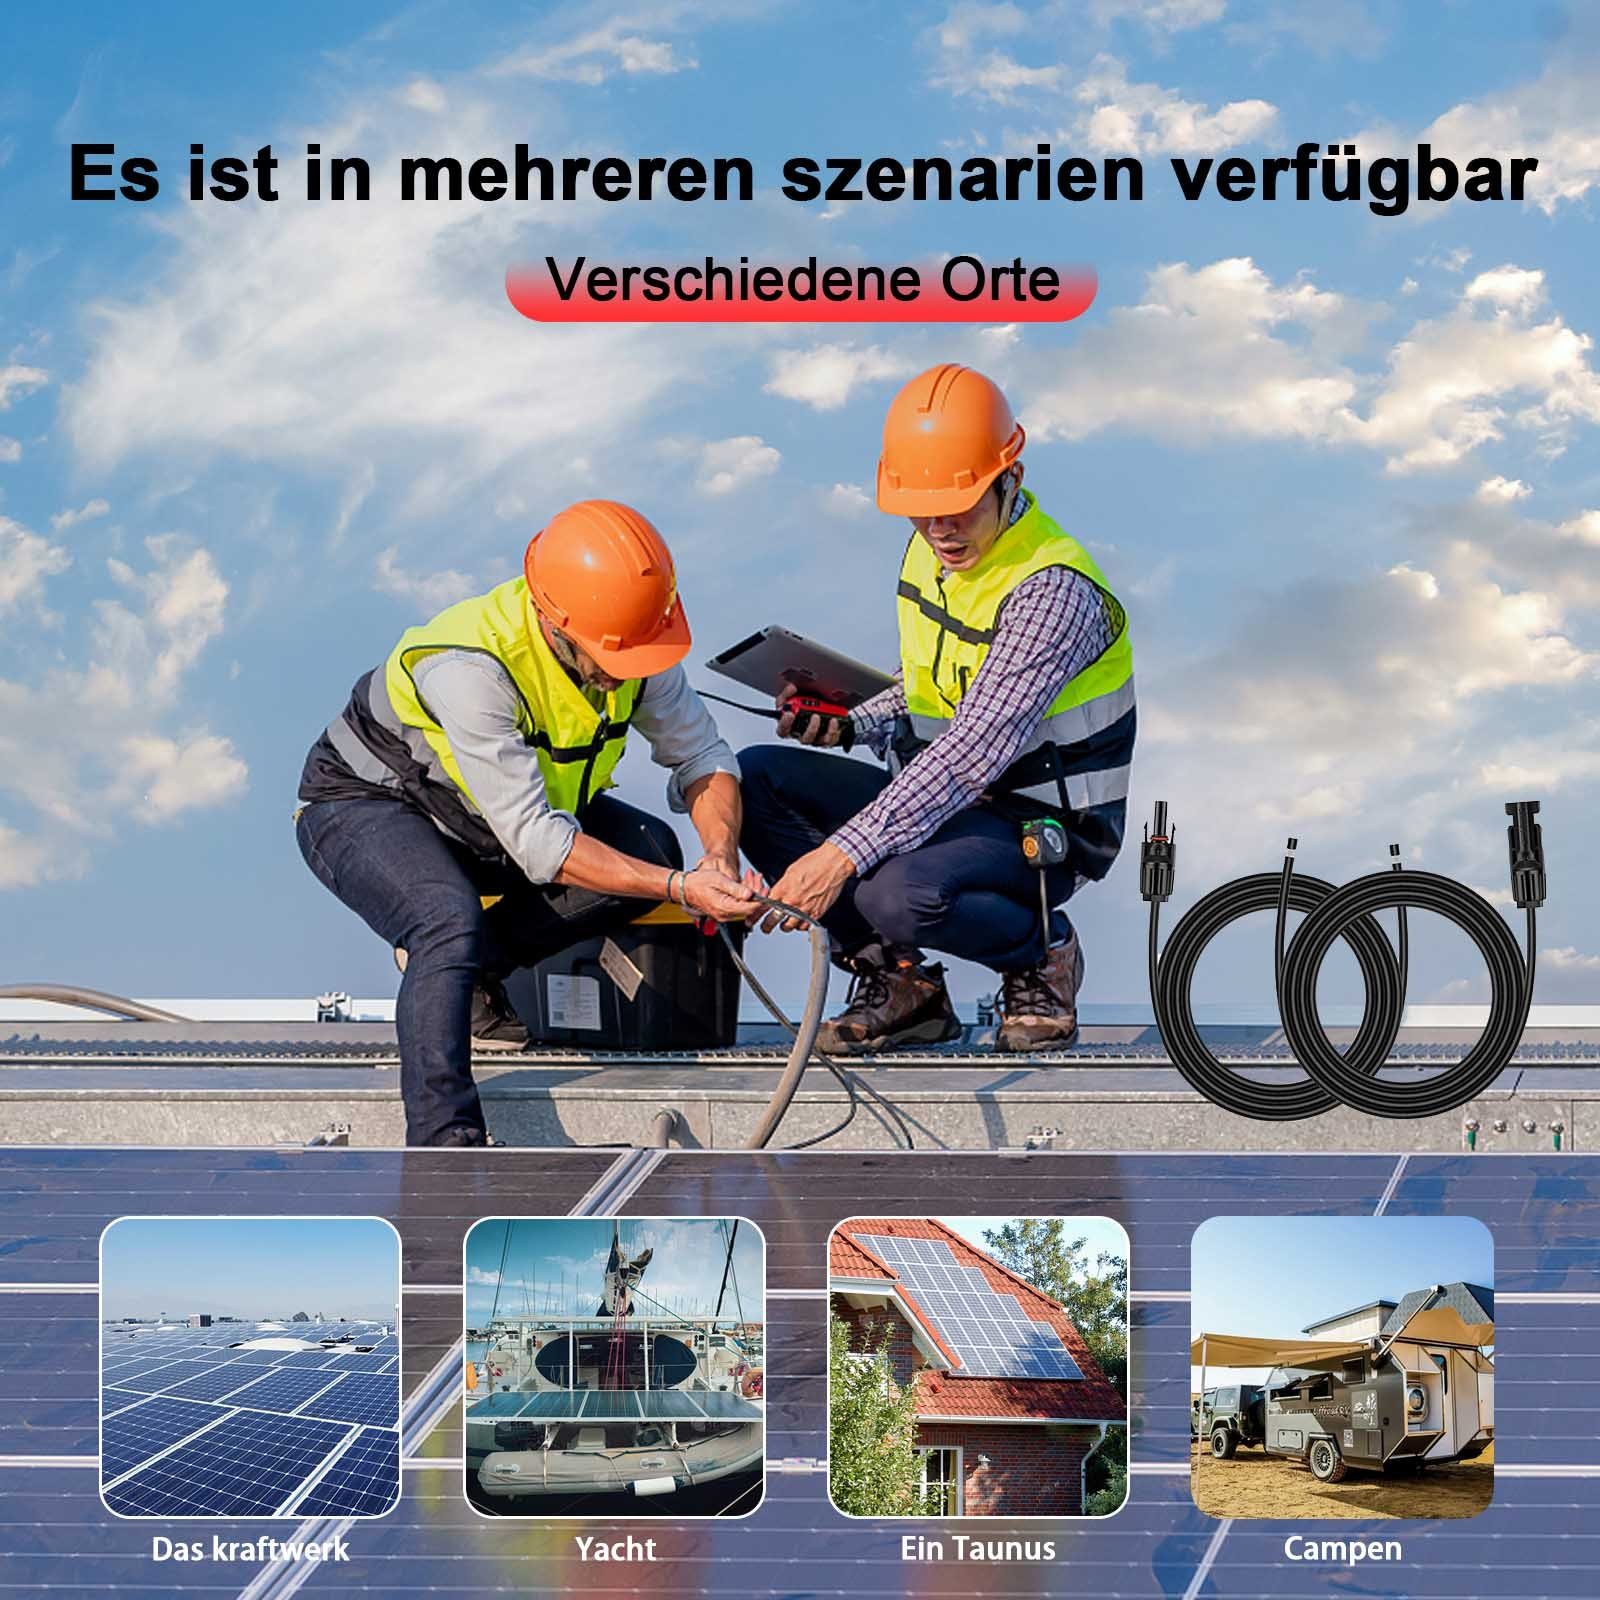 Solaranlage PFCTART 100W-Photovoltaik-Panel, Hochwertige Solarpanel